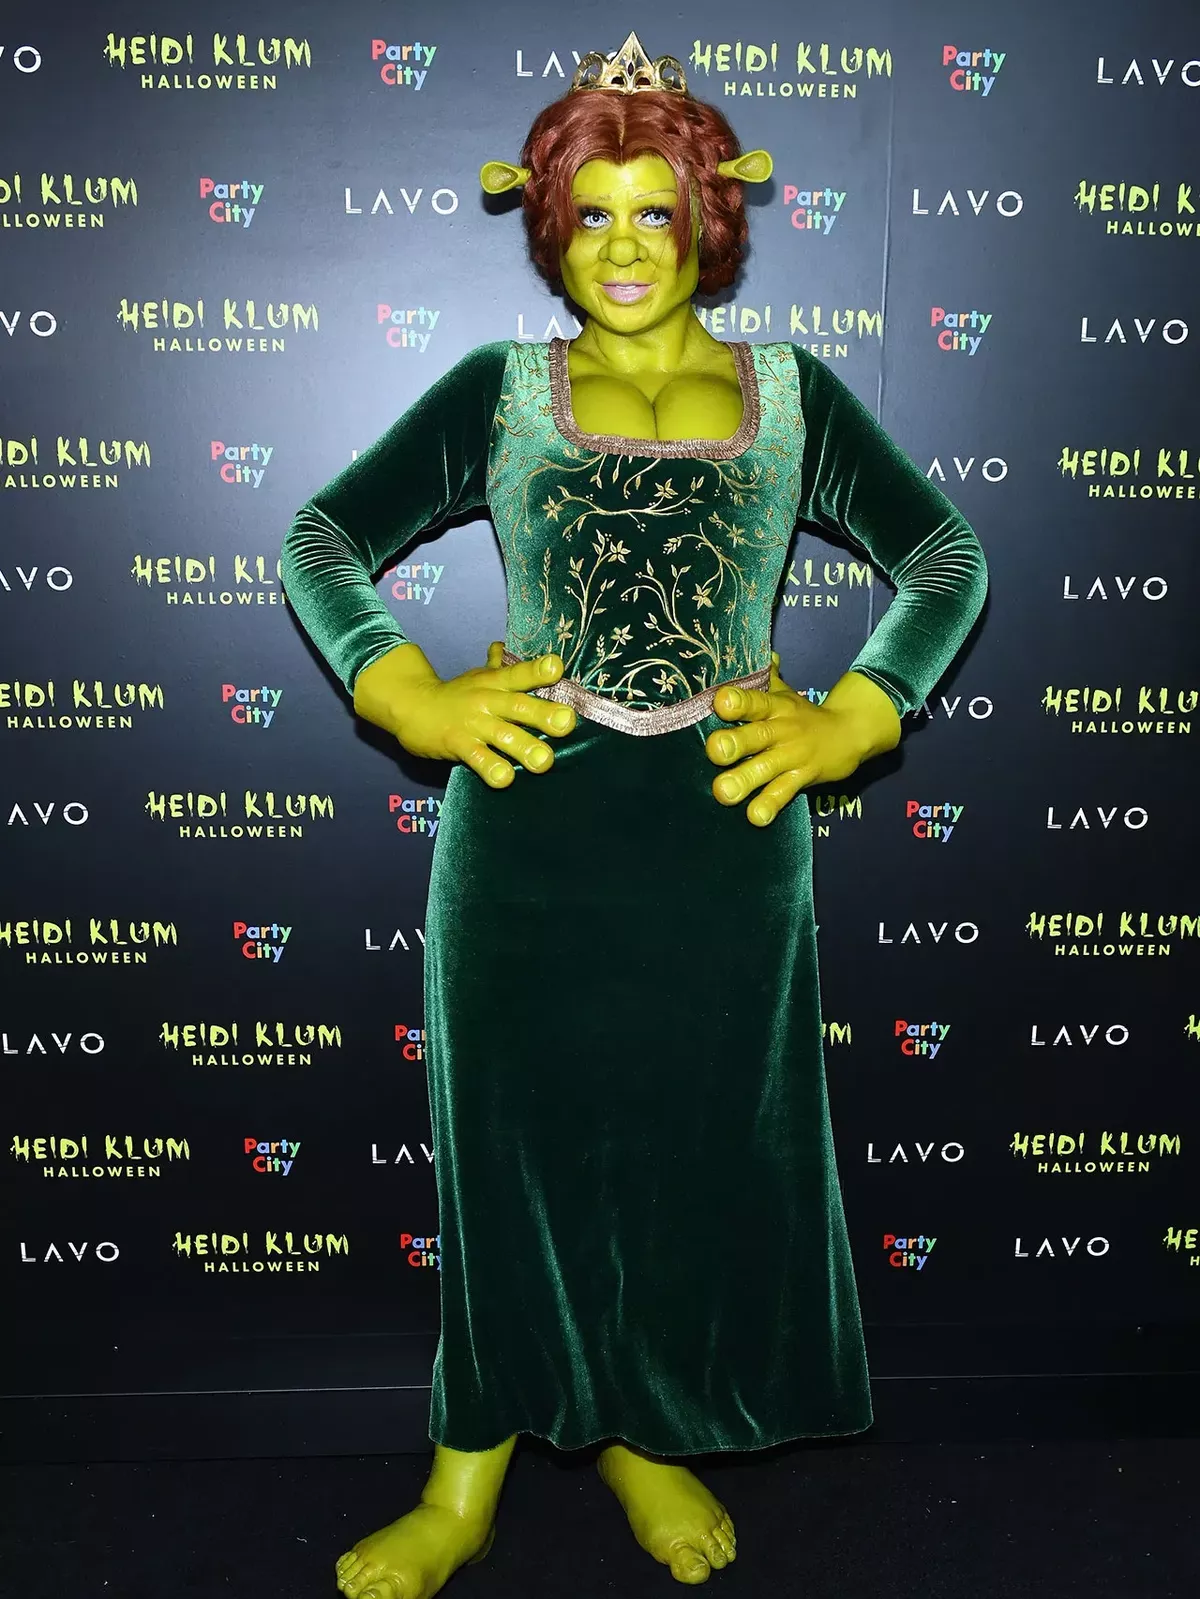 Heidi Klum dressed as Fiona from Shrek